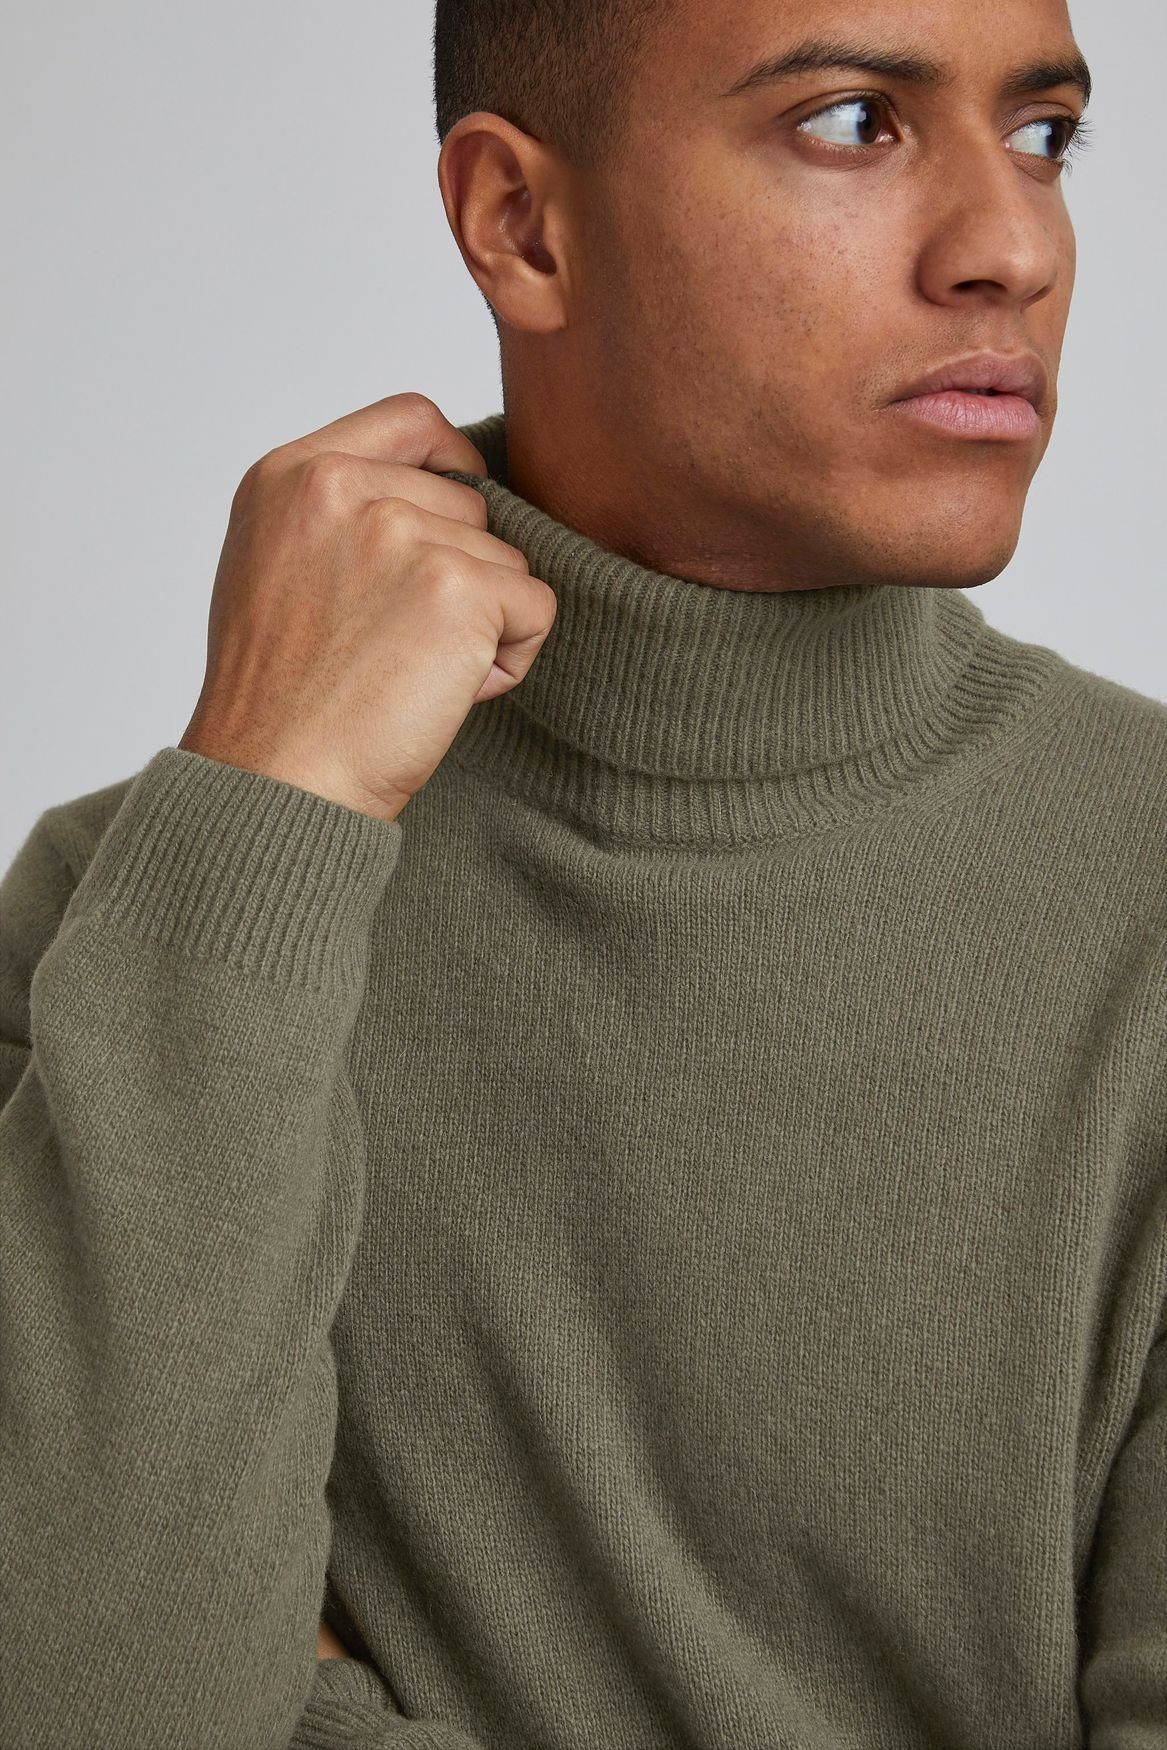 Rollkragen Olive Casual Basic Sweater 4428 Pullover Warmer KARL in Strick Friday Strickpullover